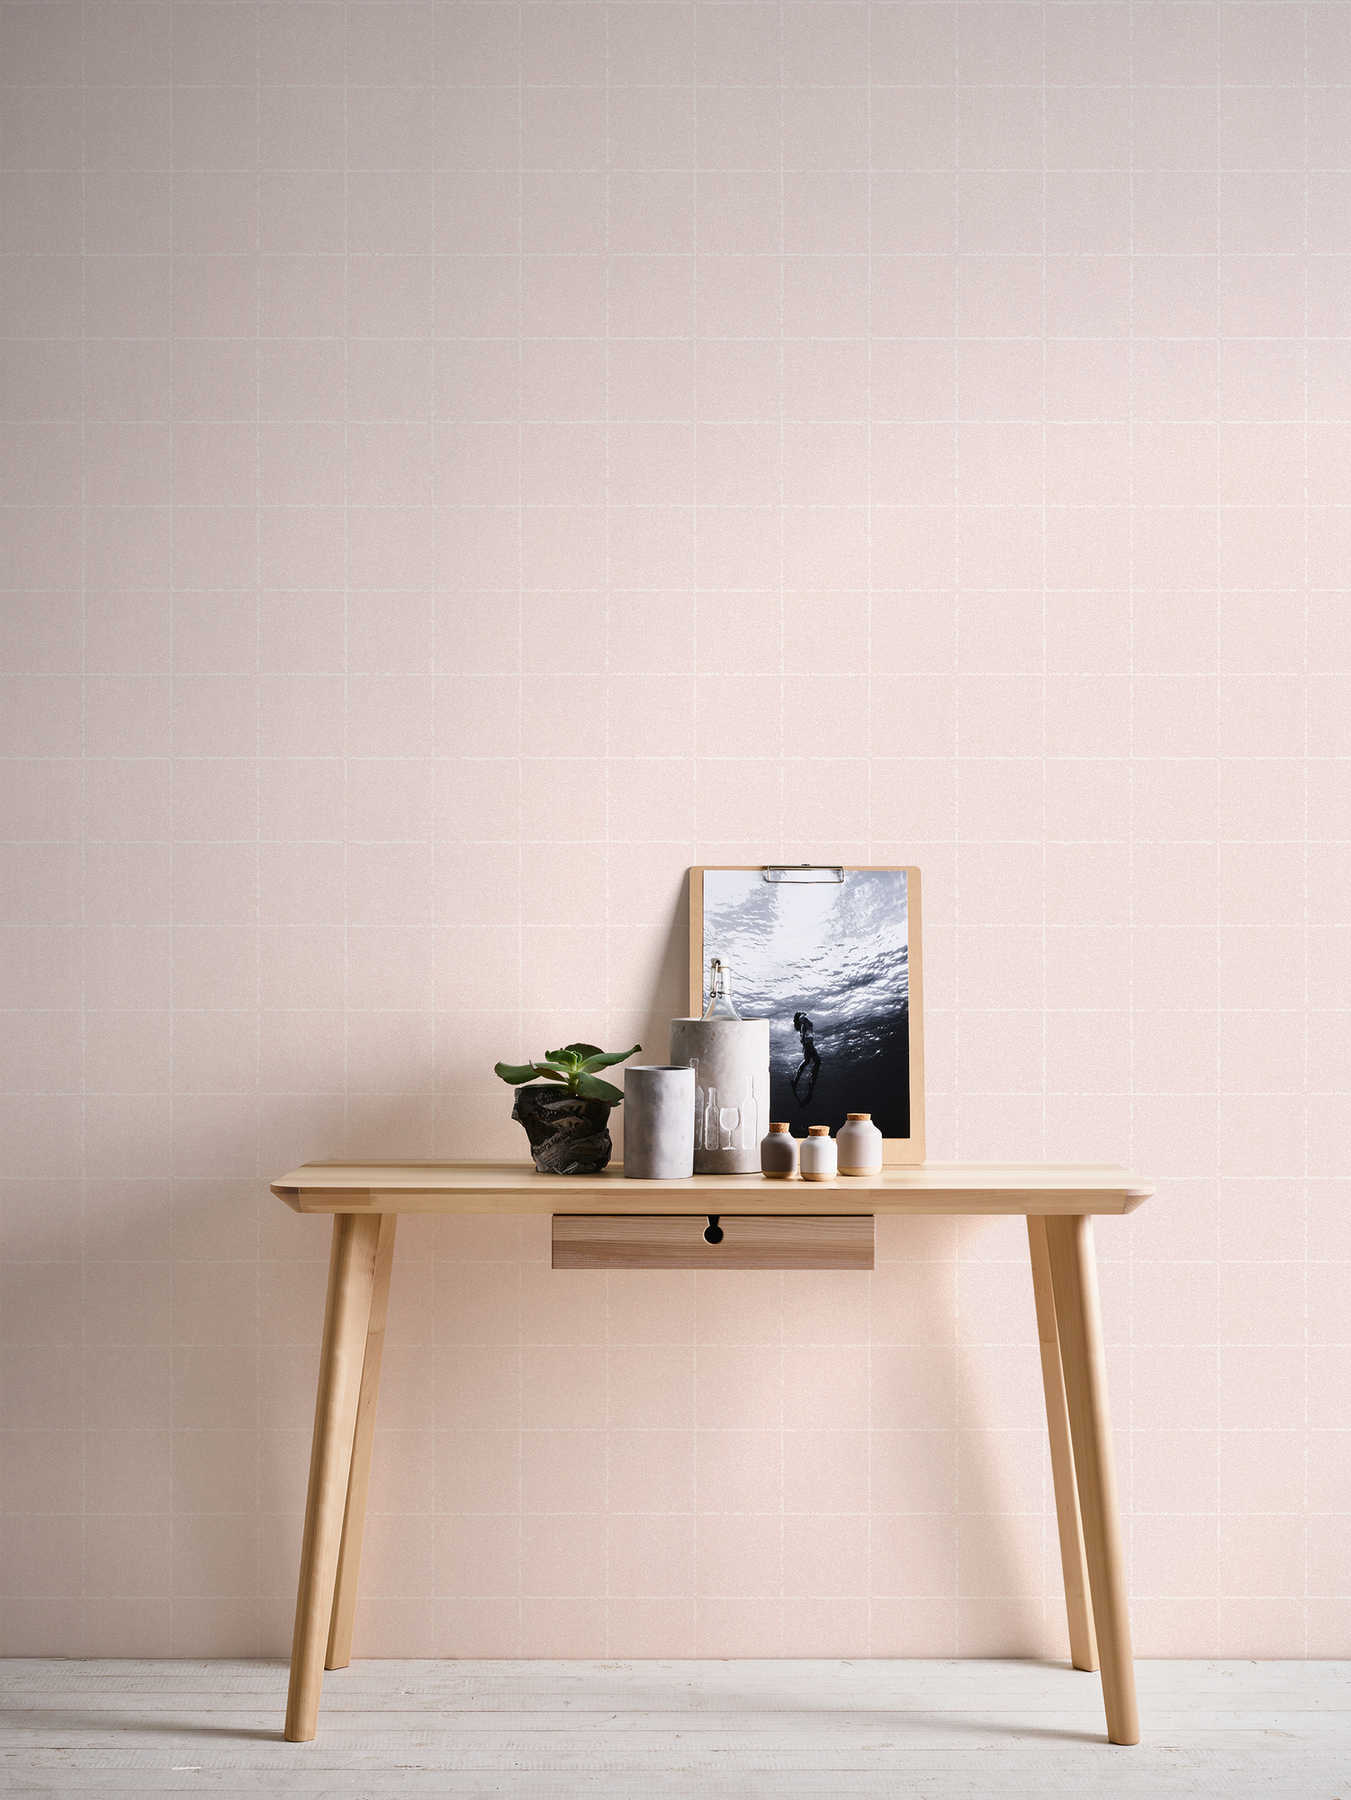             Textile optic checkered wallpaper, textured - pink, white, cream
        